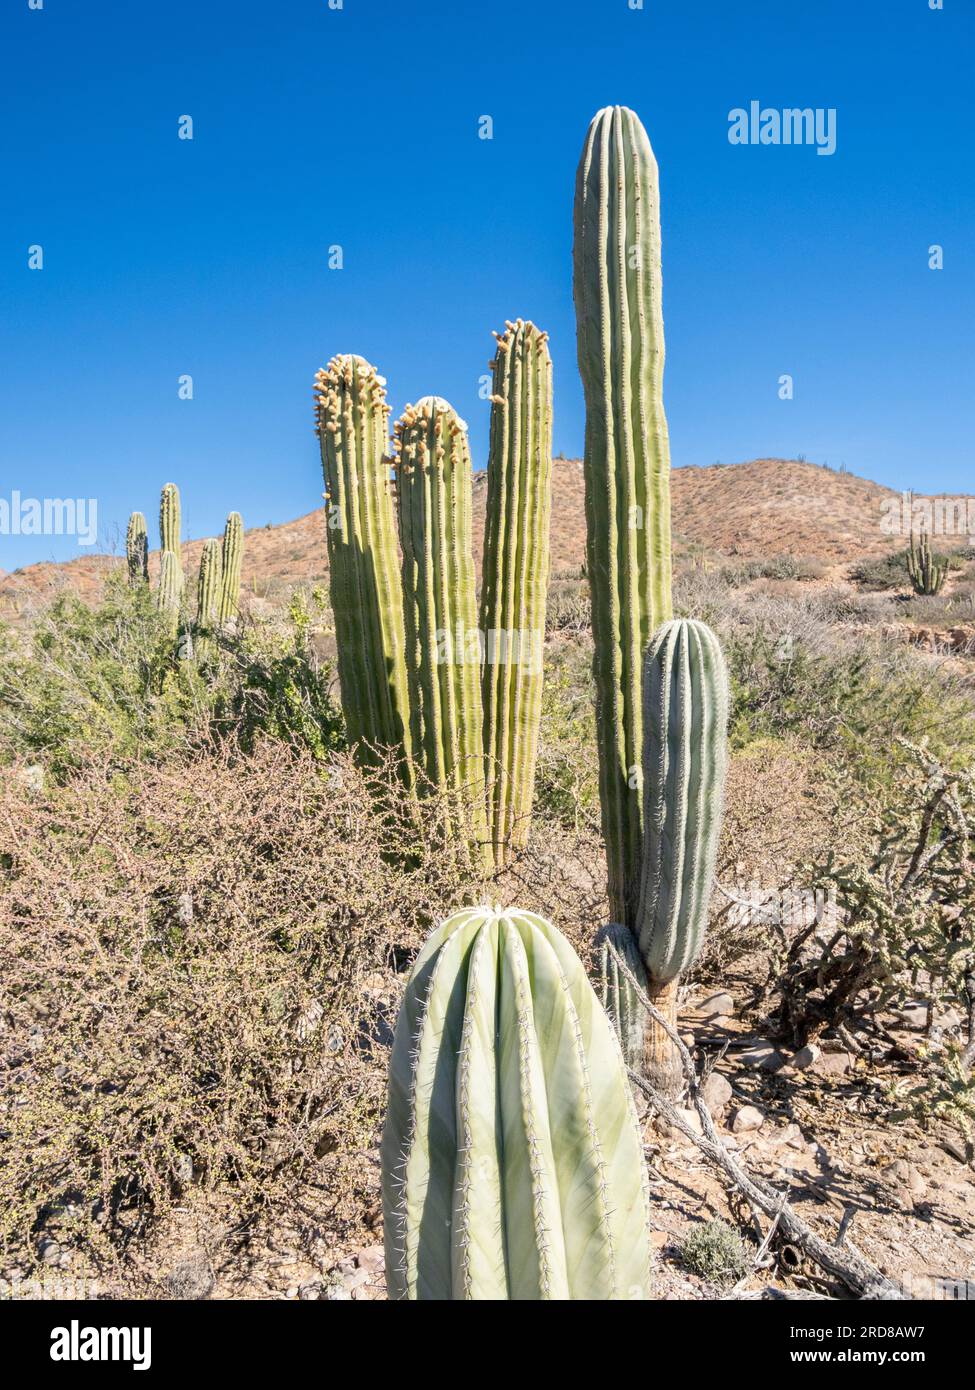 Cardon cactus (Pachycereus pringlei), flowering on Isla San Esteban, Baja California, Mexico, North America Stock Photo